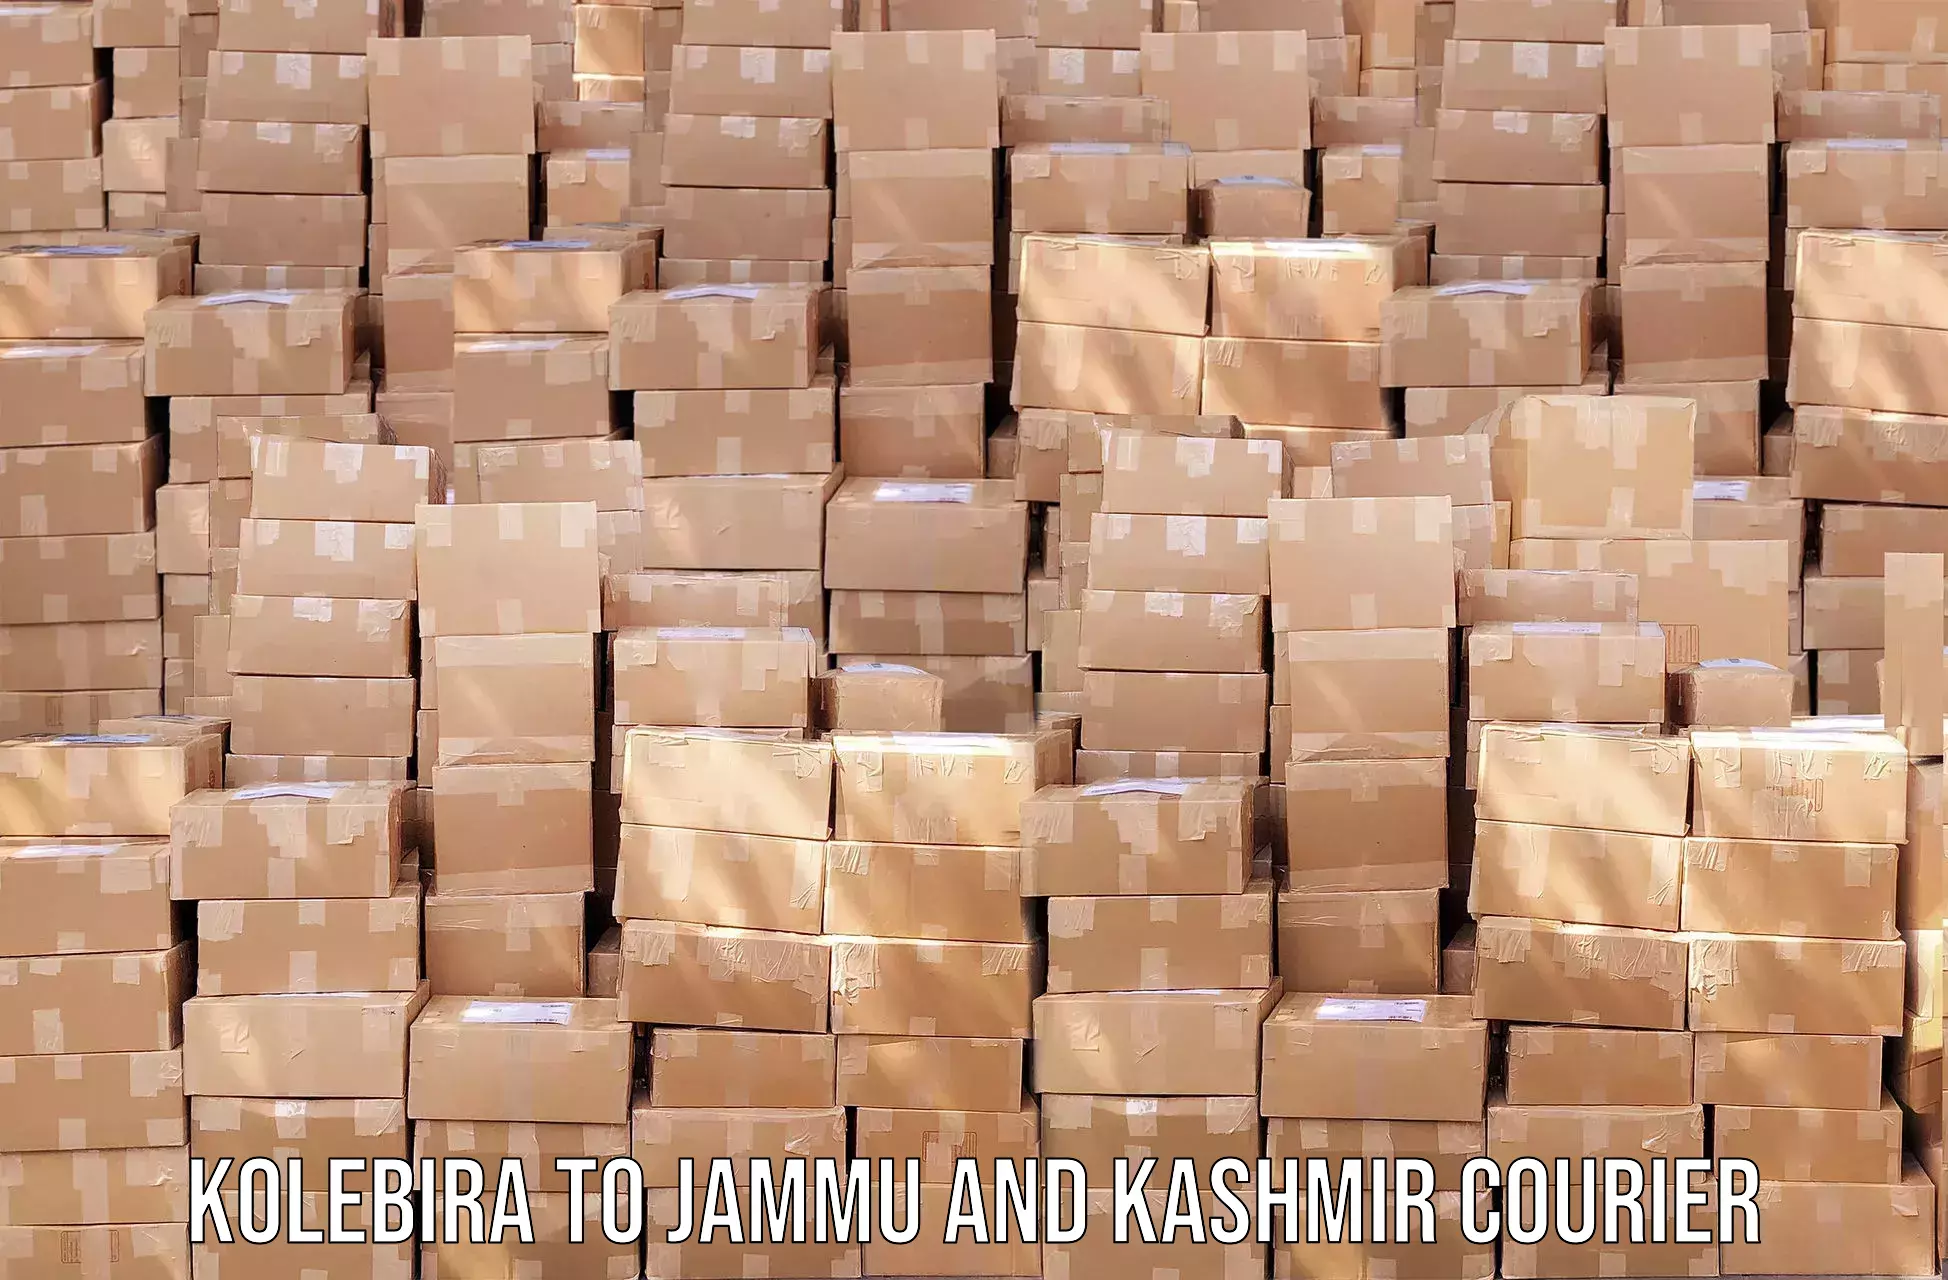 Digital courier platforms Kolebira to Jammu and Kashmir